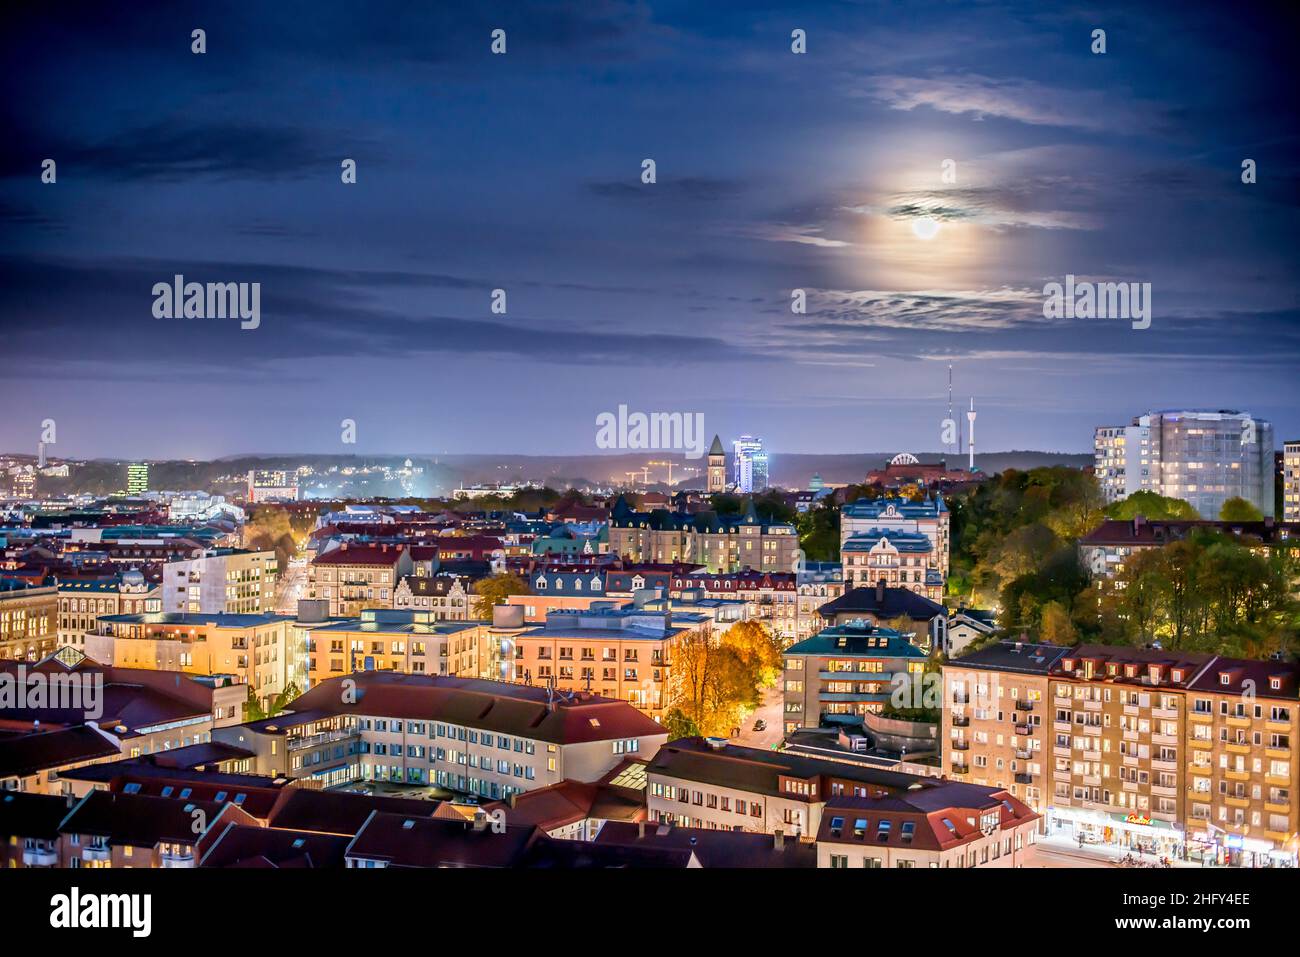 Gothenburg, Svezia - 26 2015 ottobre: Al chiaro di luna su Vasastaden. Foto Stock